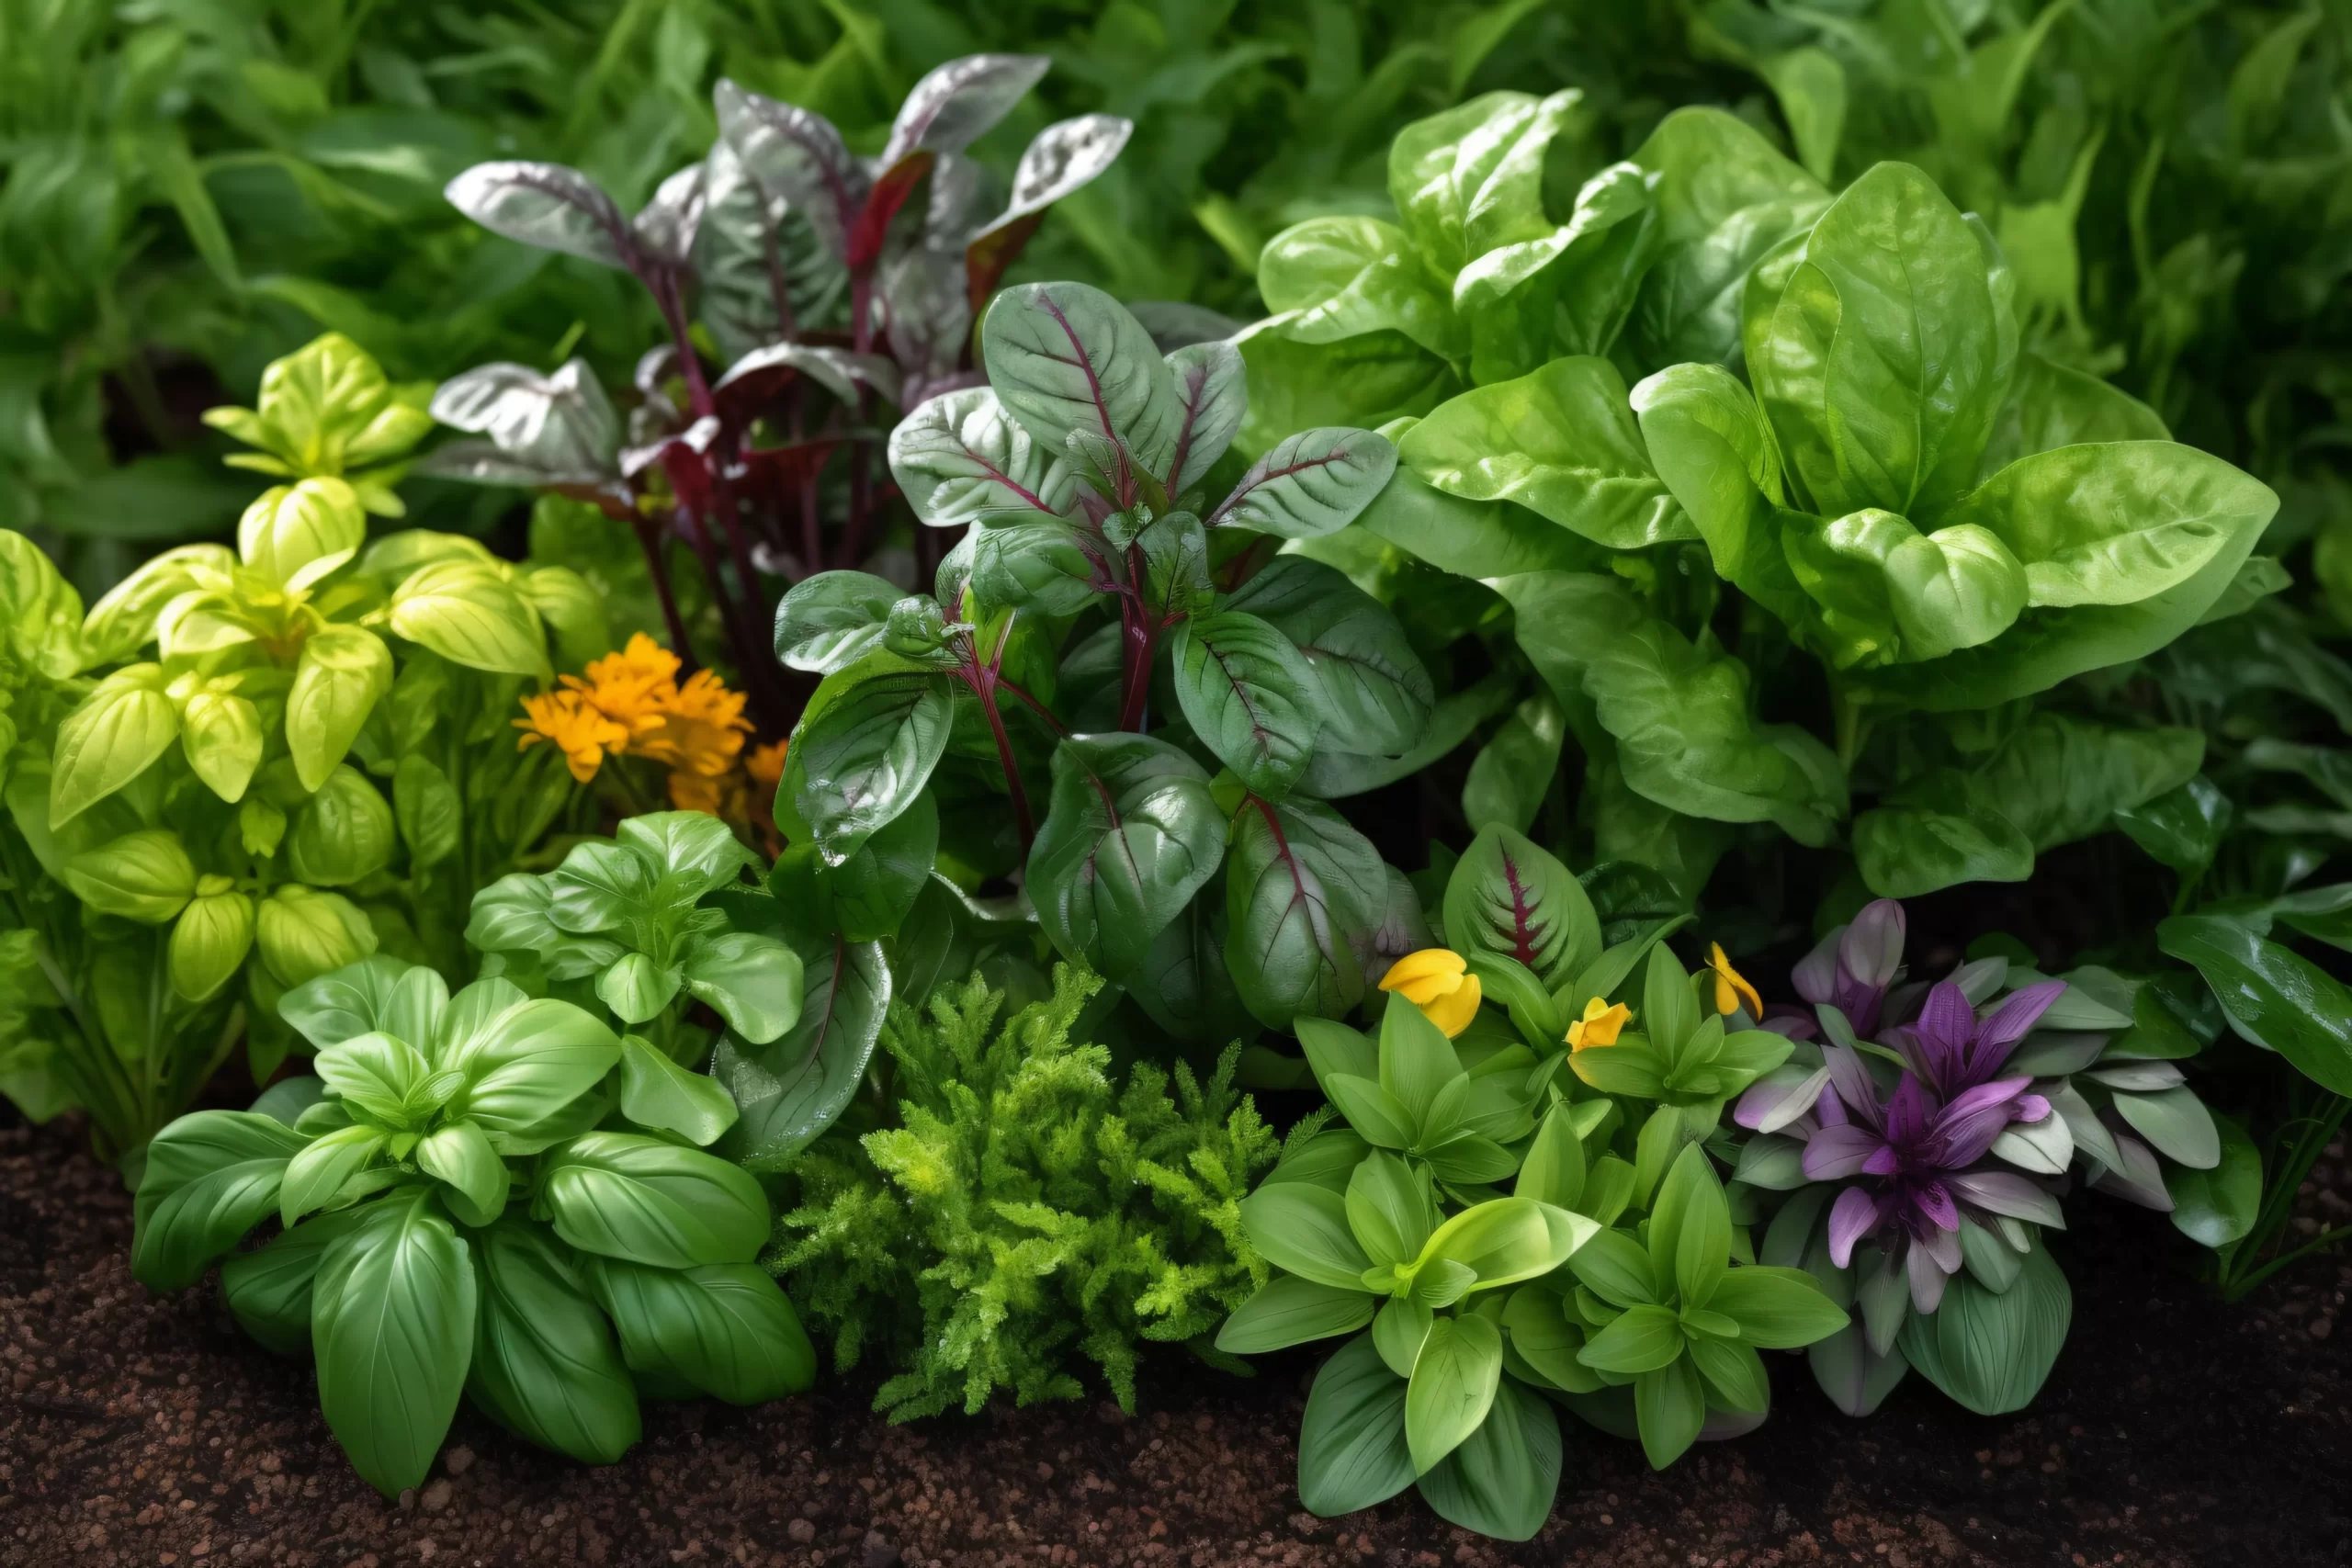 Basil companion plants grown in a single garden bed